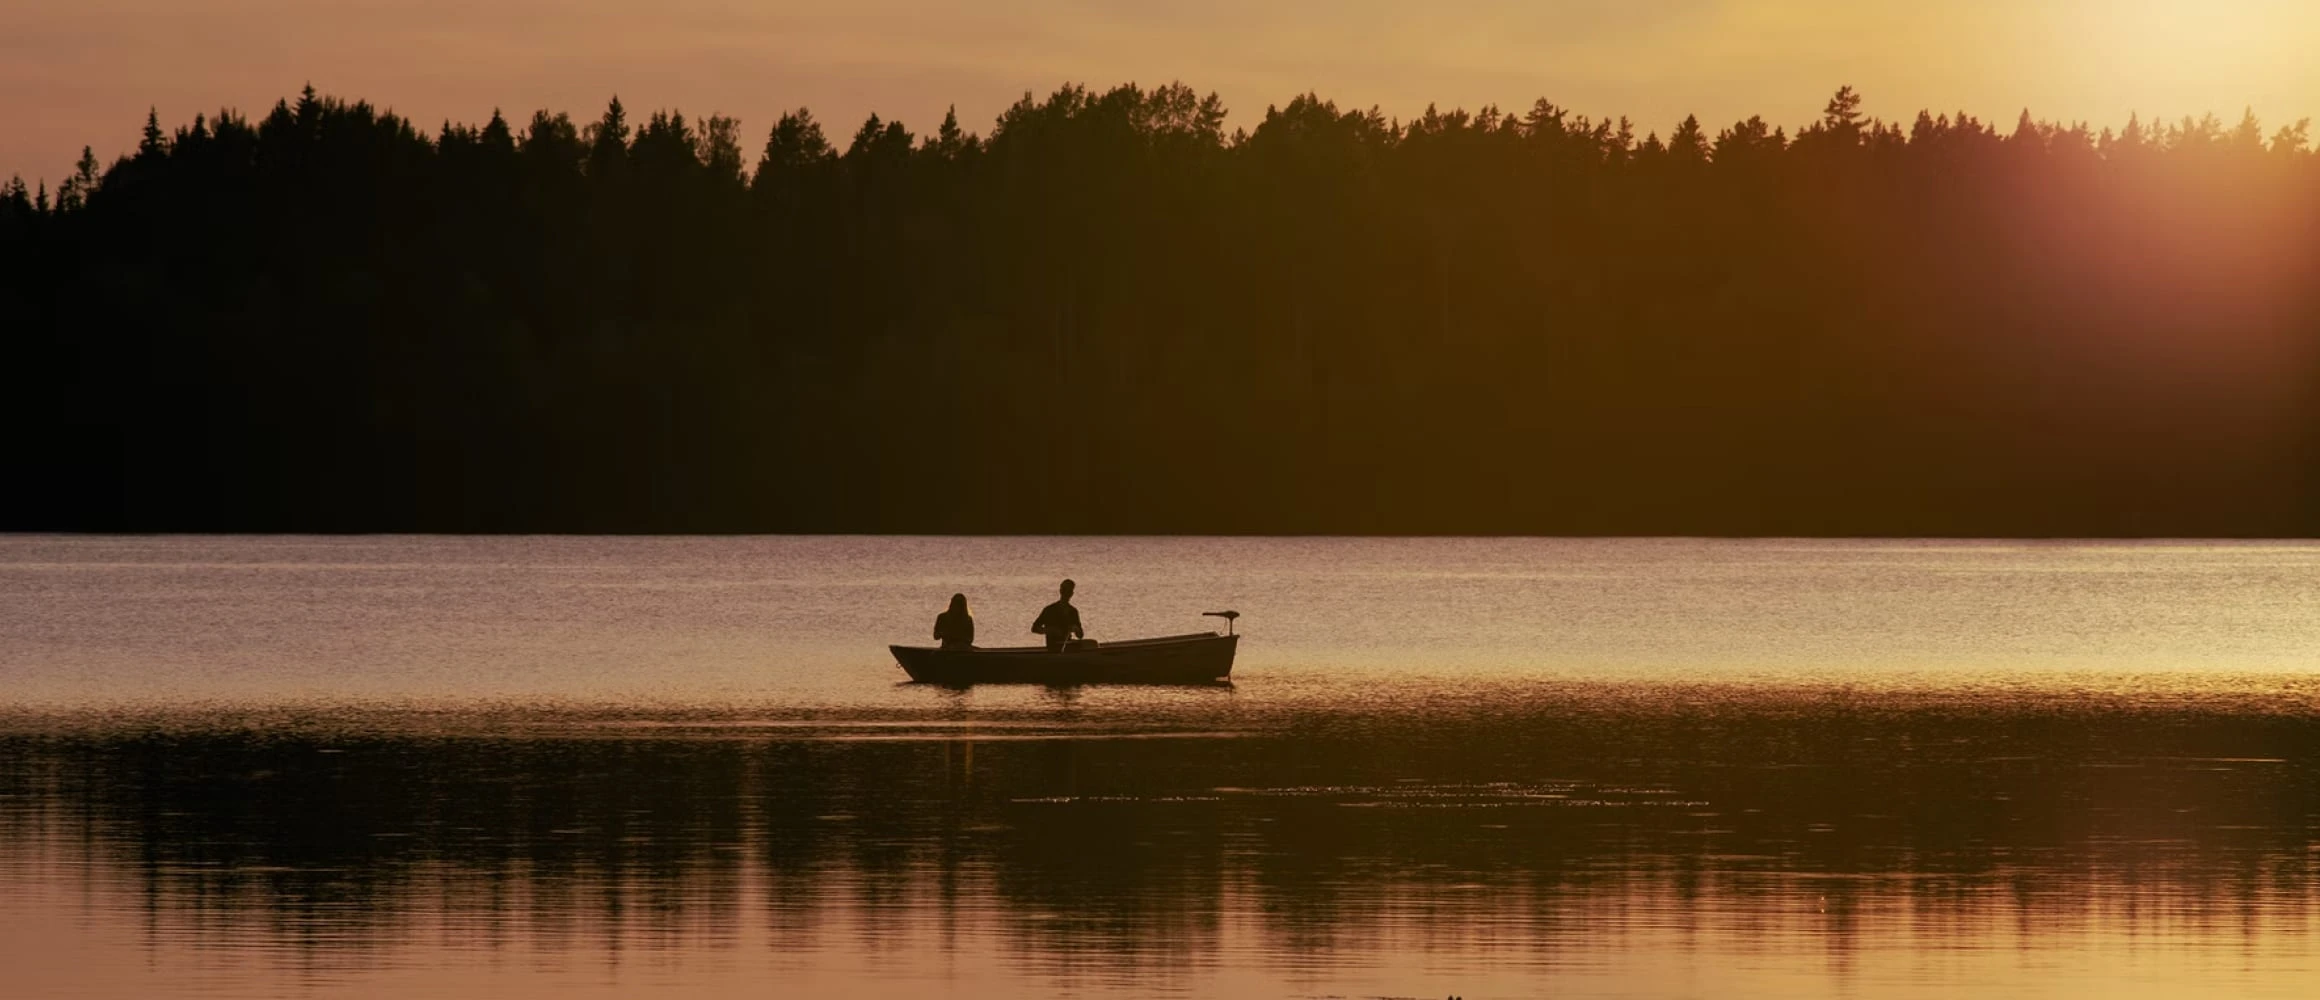 A couple paddling a boat